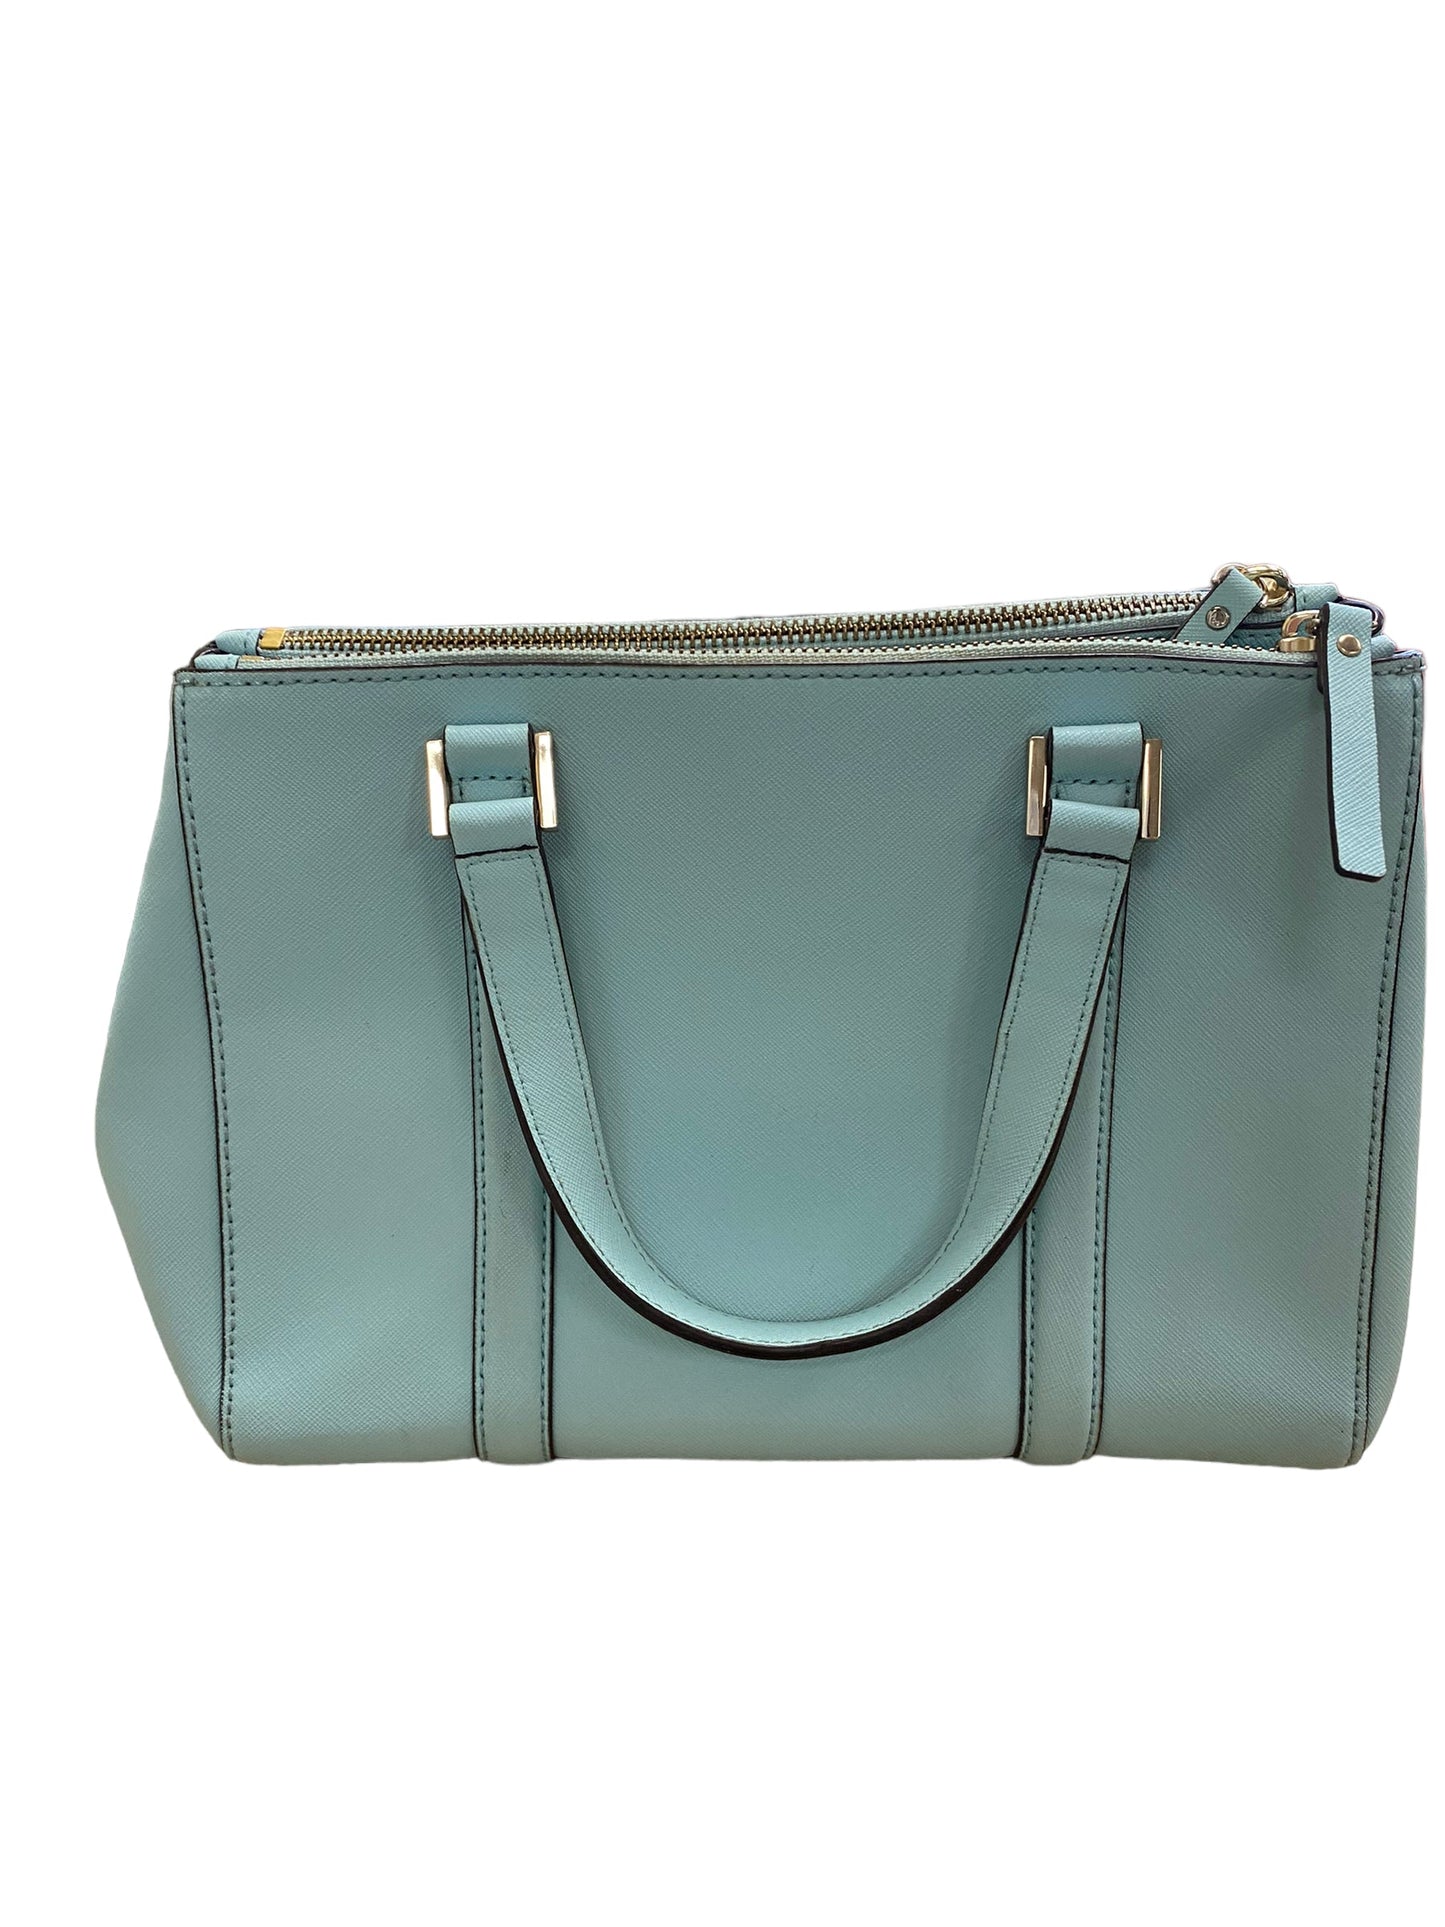 Handbag By Kate Spade  Size: Medium